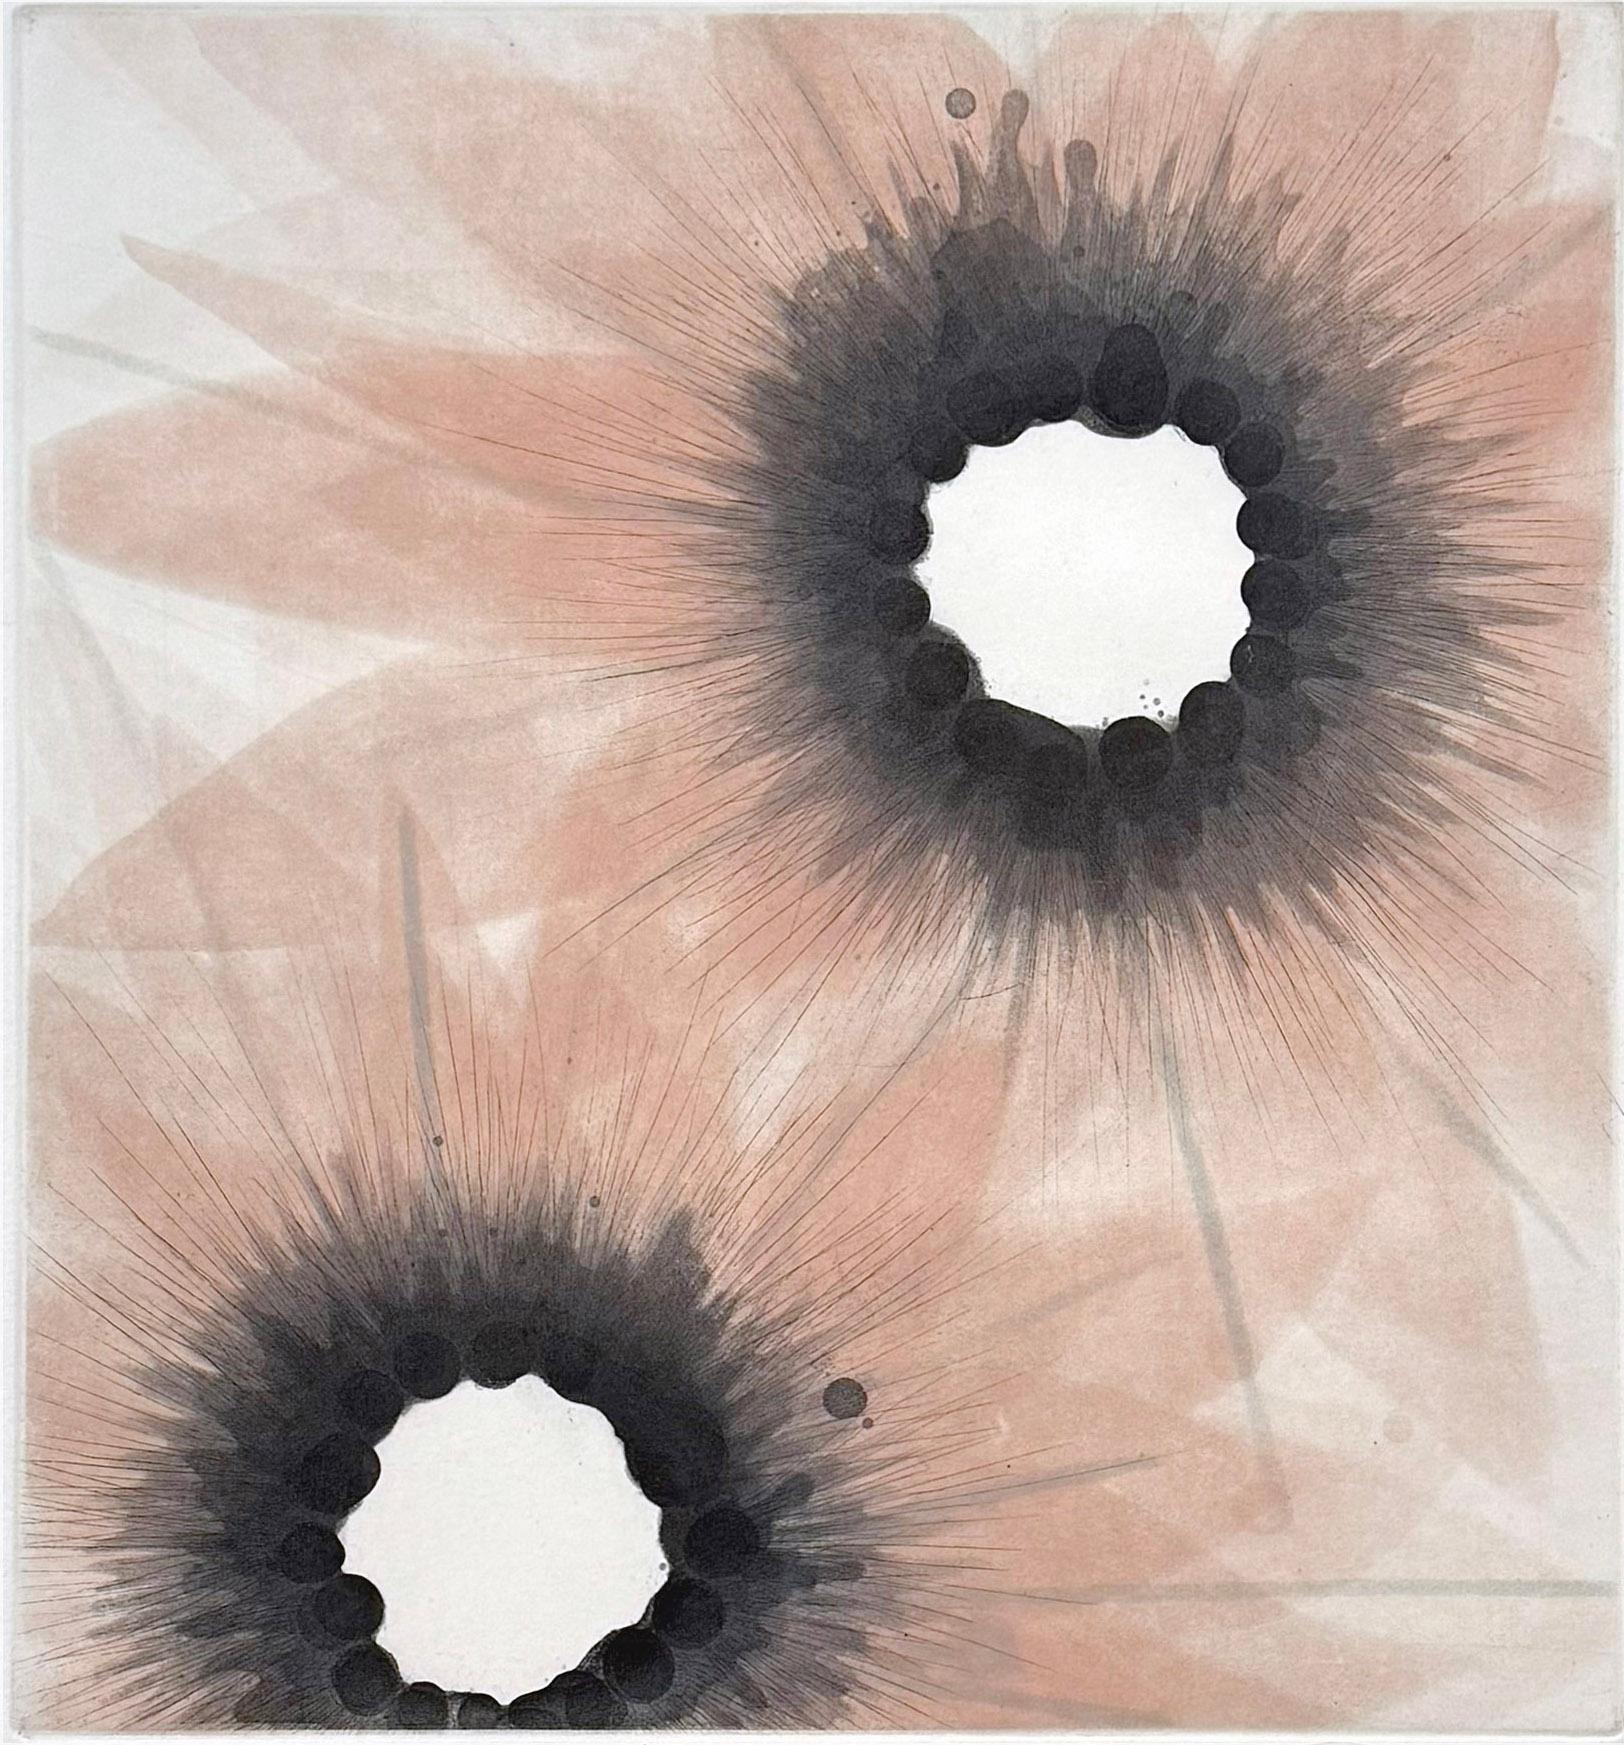 Connection-Blossom #3, by Seiko Tachibana